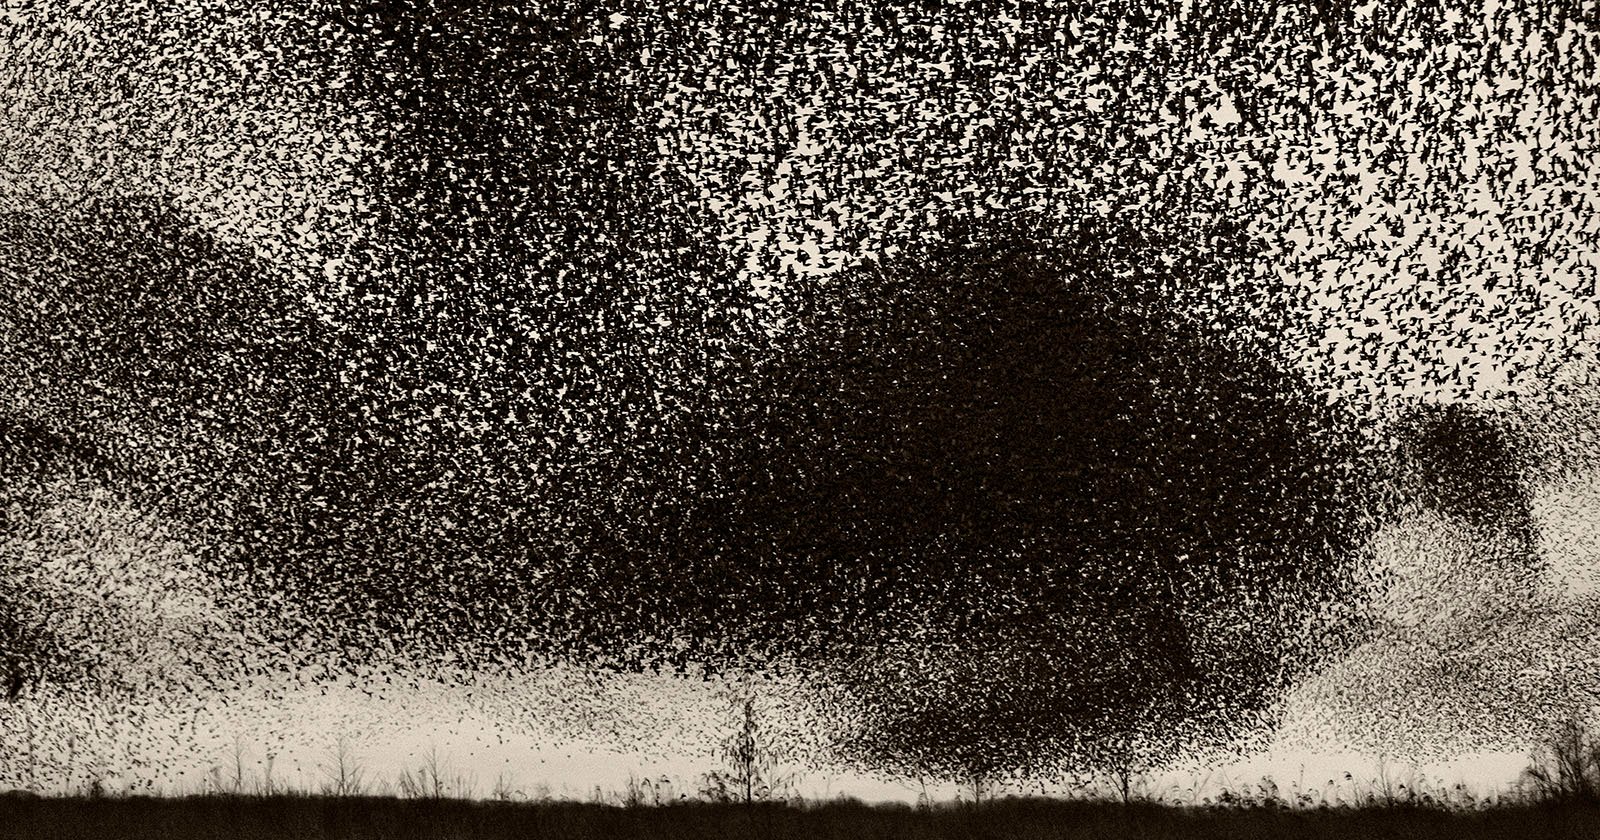 Black Sun: Photos of Starling Flocks Darkening the Sky Over Denmark